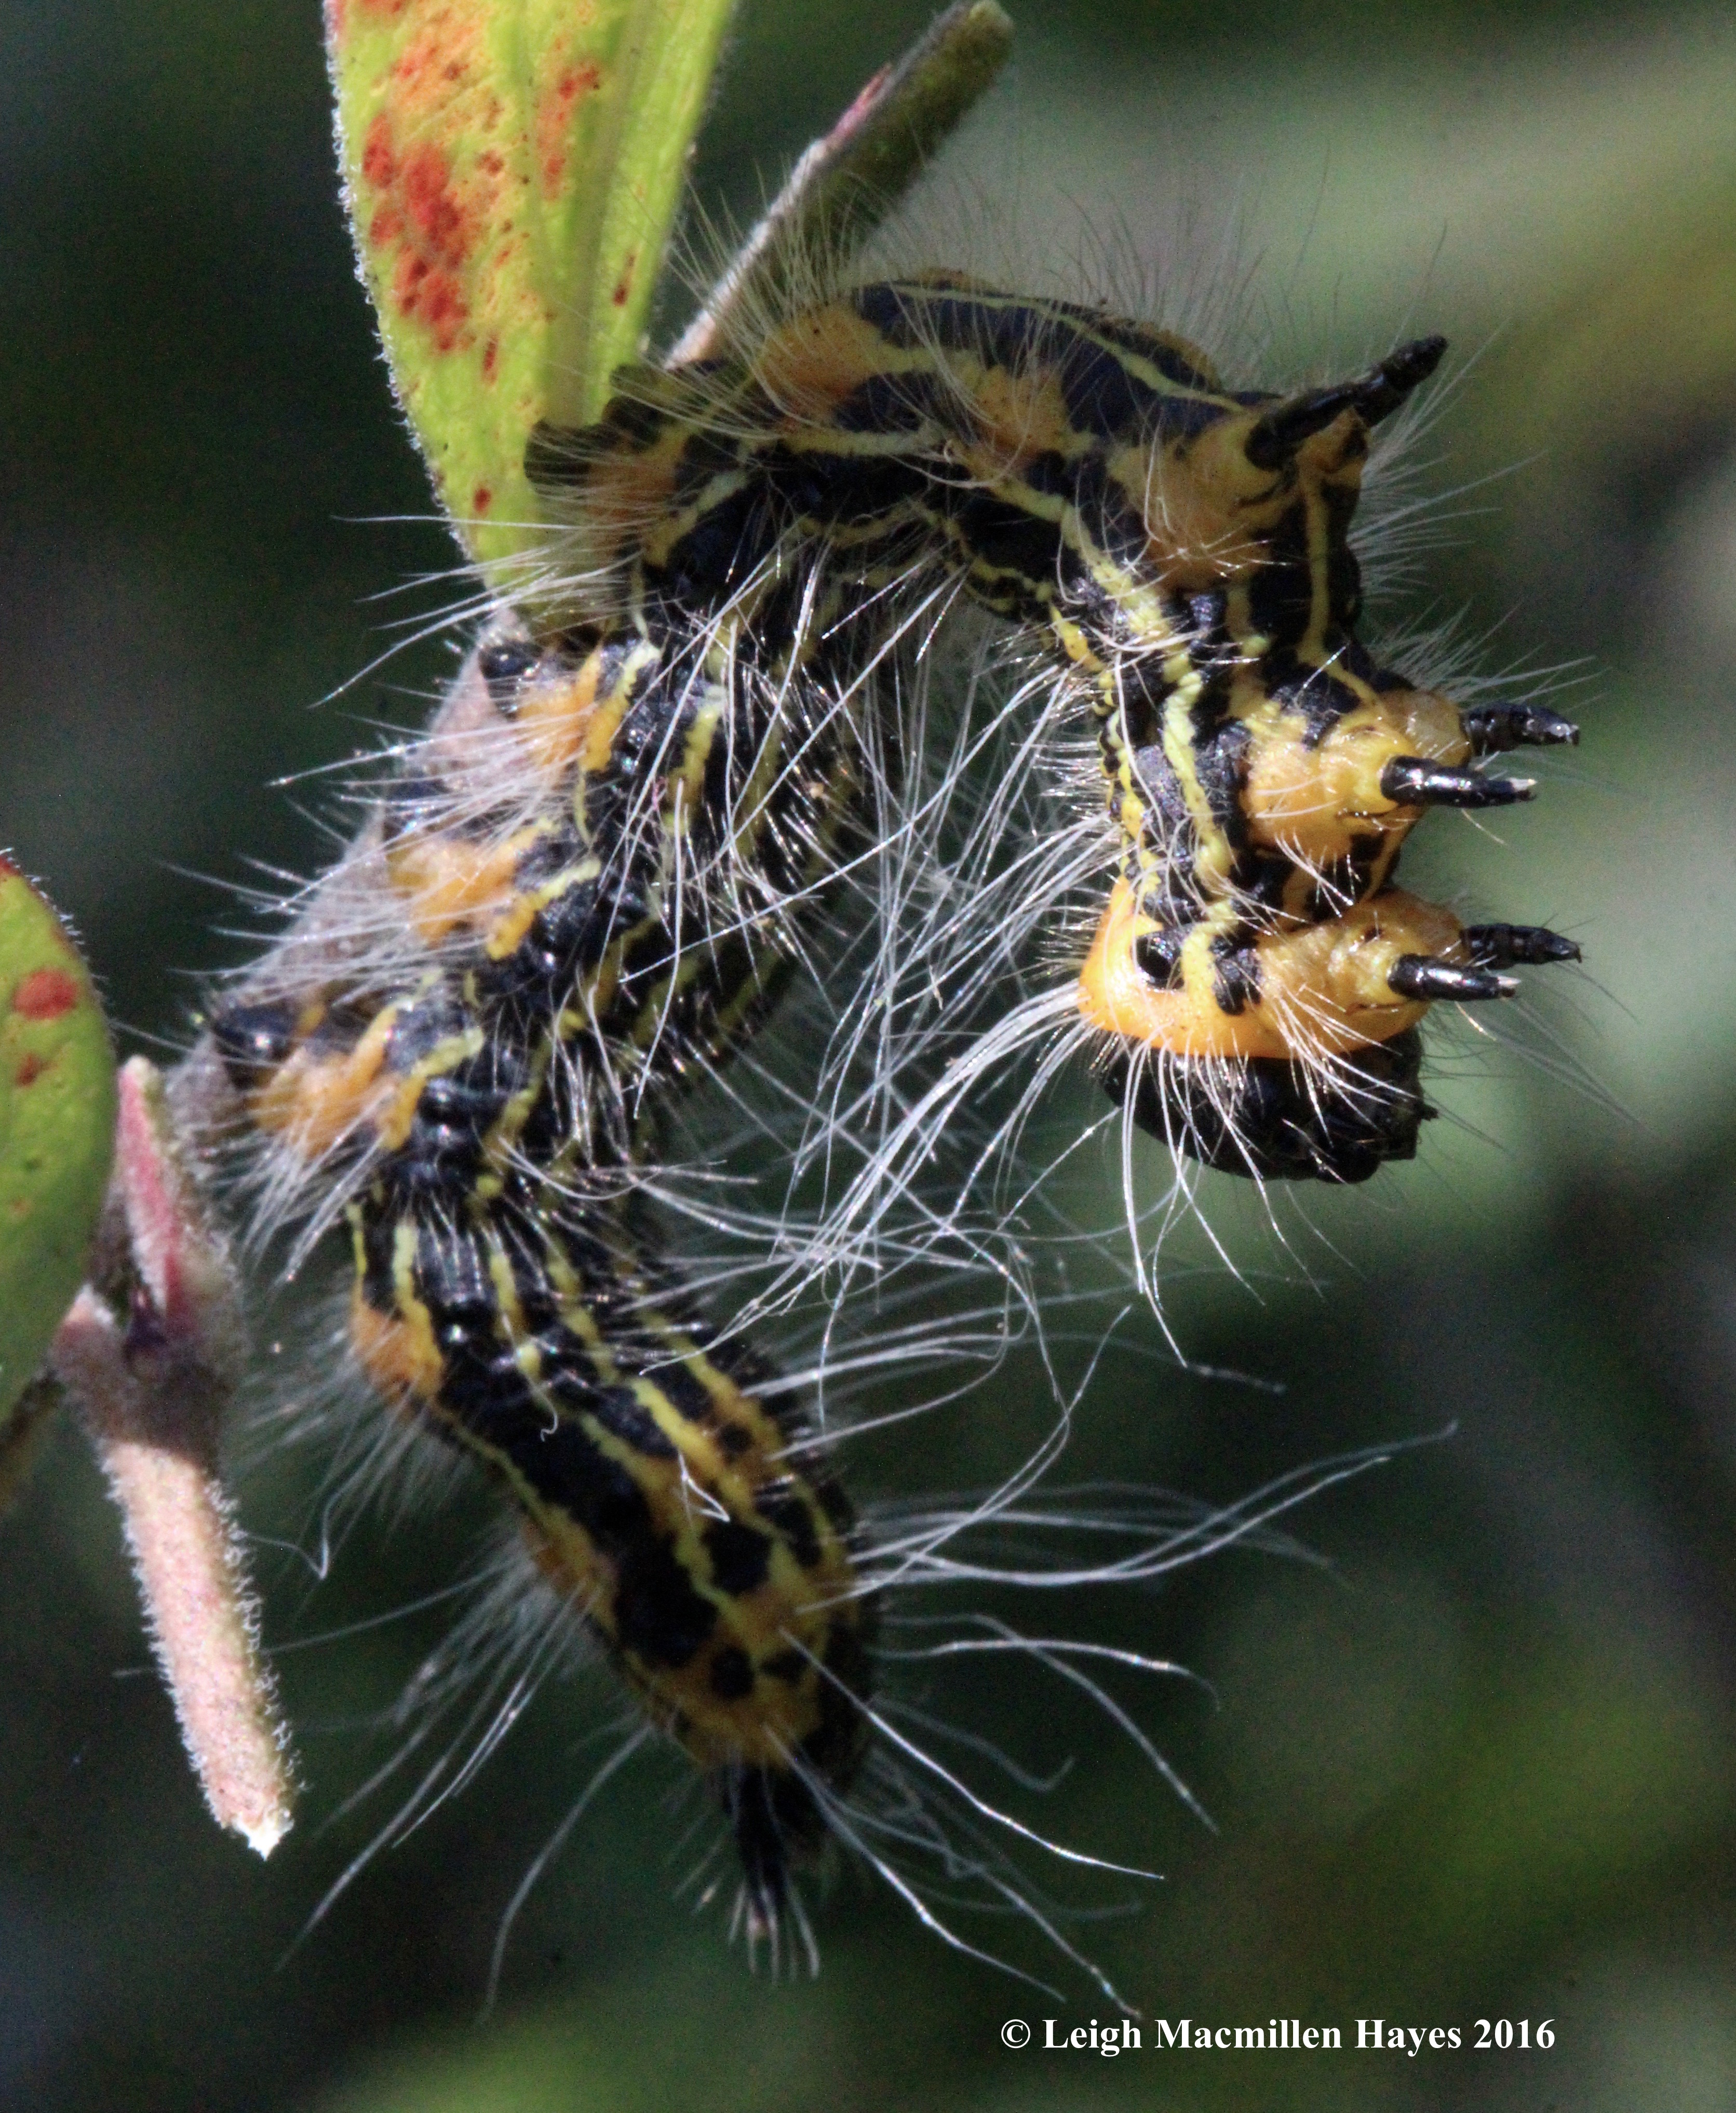 h-yellow-necked caterpillar